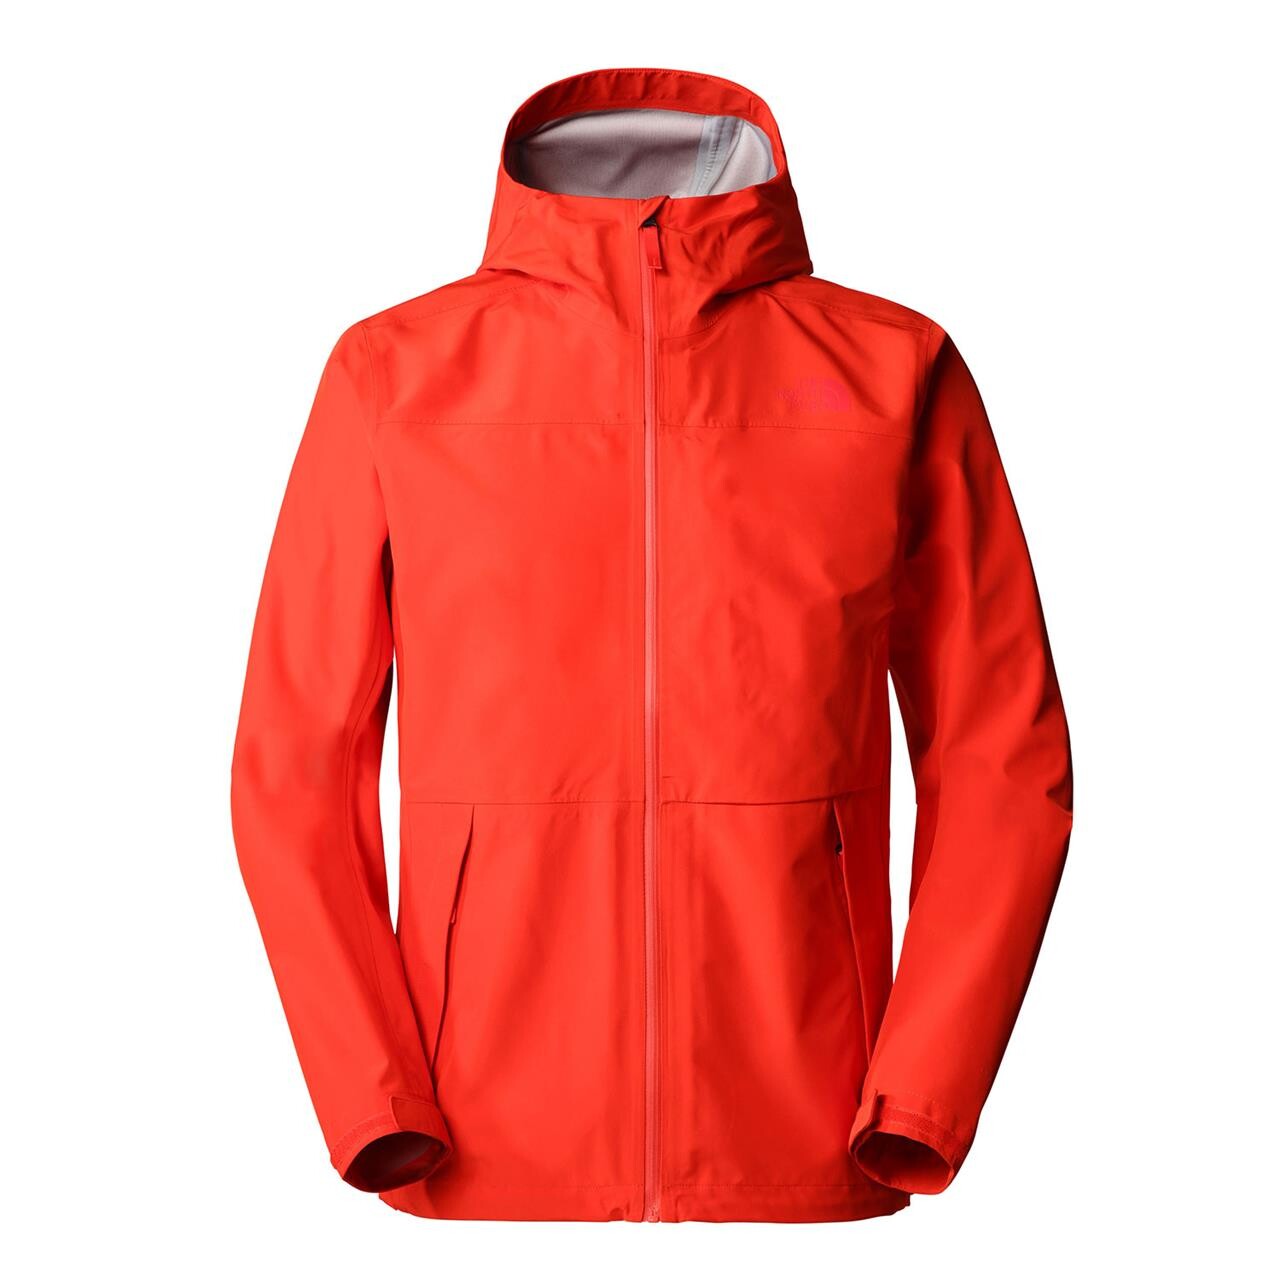 Se The North Face Mens Dryzzle Futurelight Jacket (Rød (FIERY RED) Medium) hos Friluftsland.dk